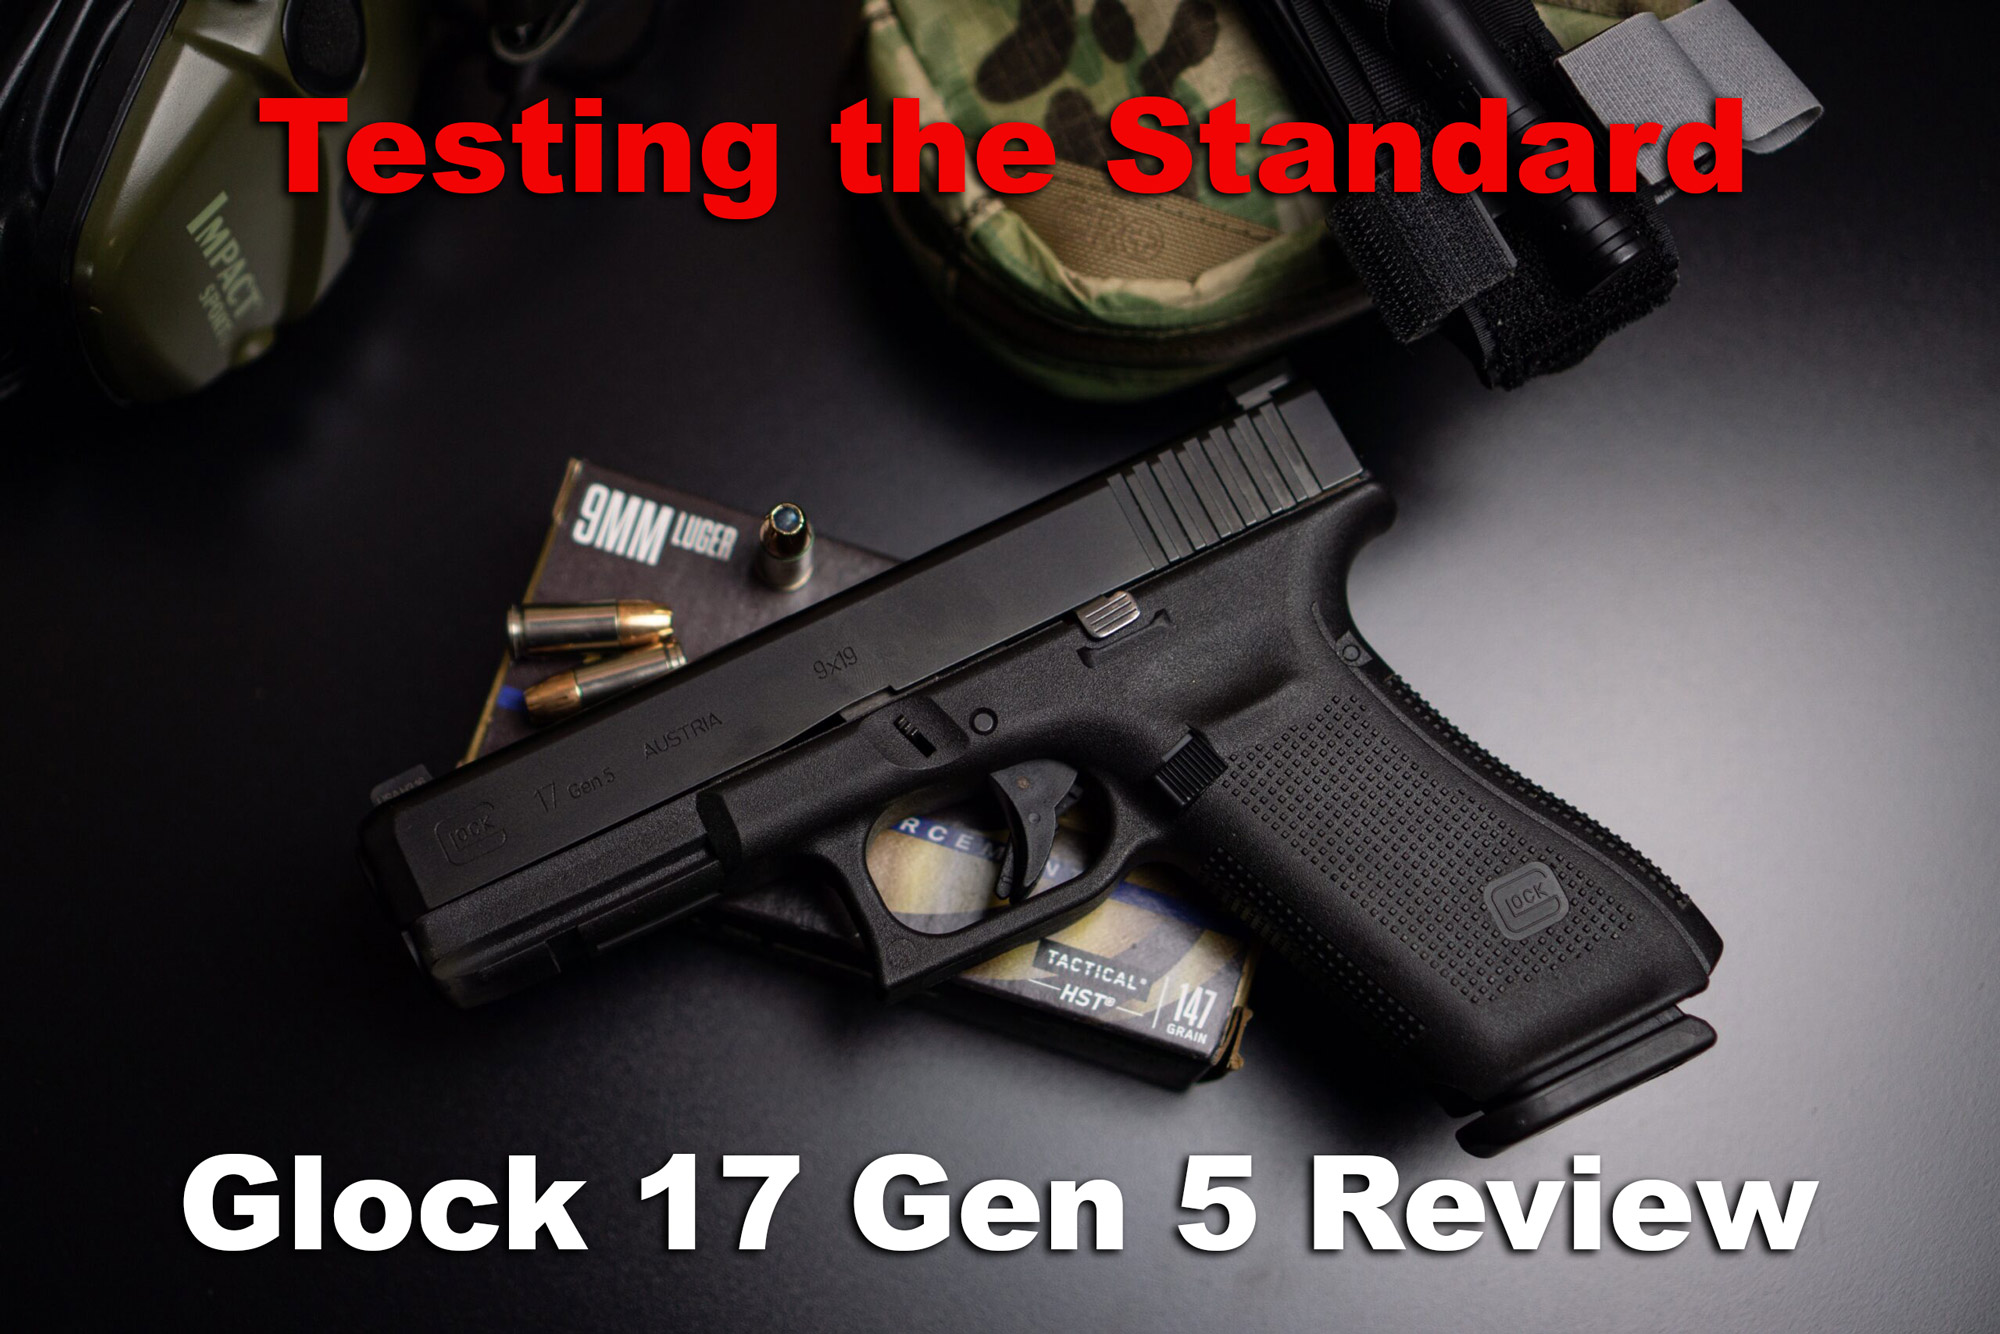 A cop reviews the Gen5 Glock 17